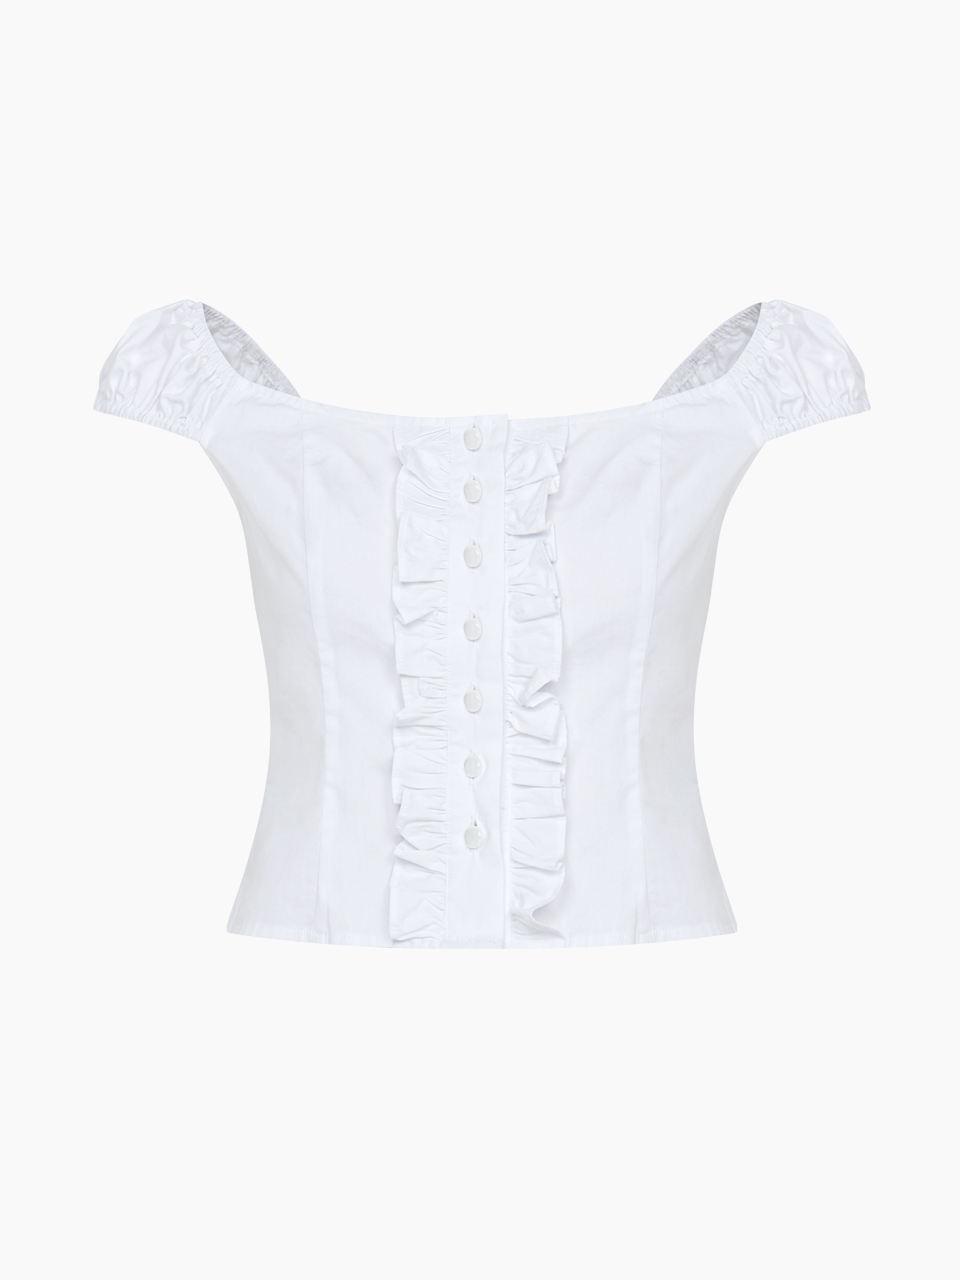 frill sleeveless blouse top - white